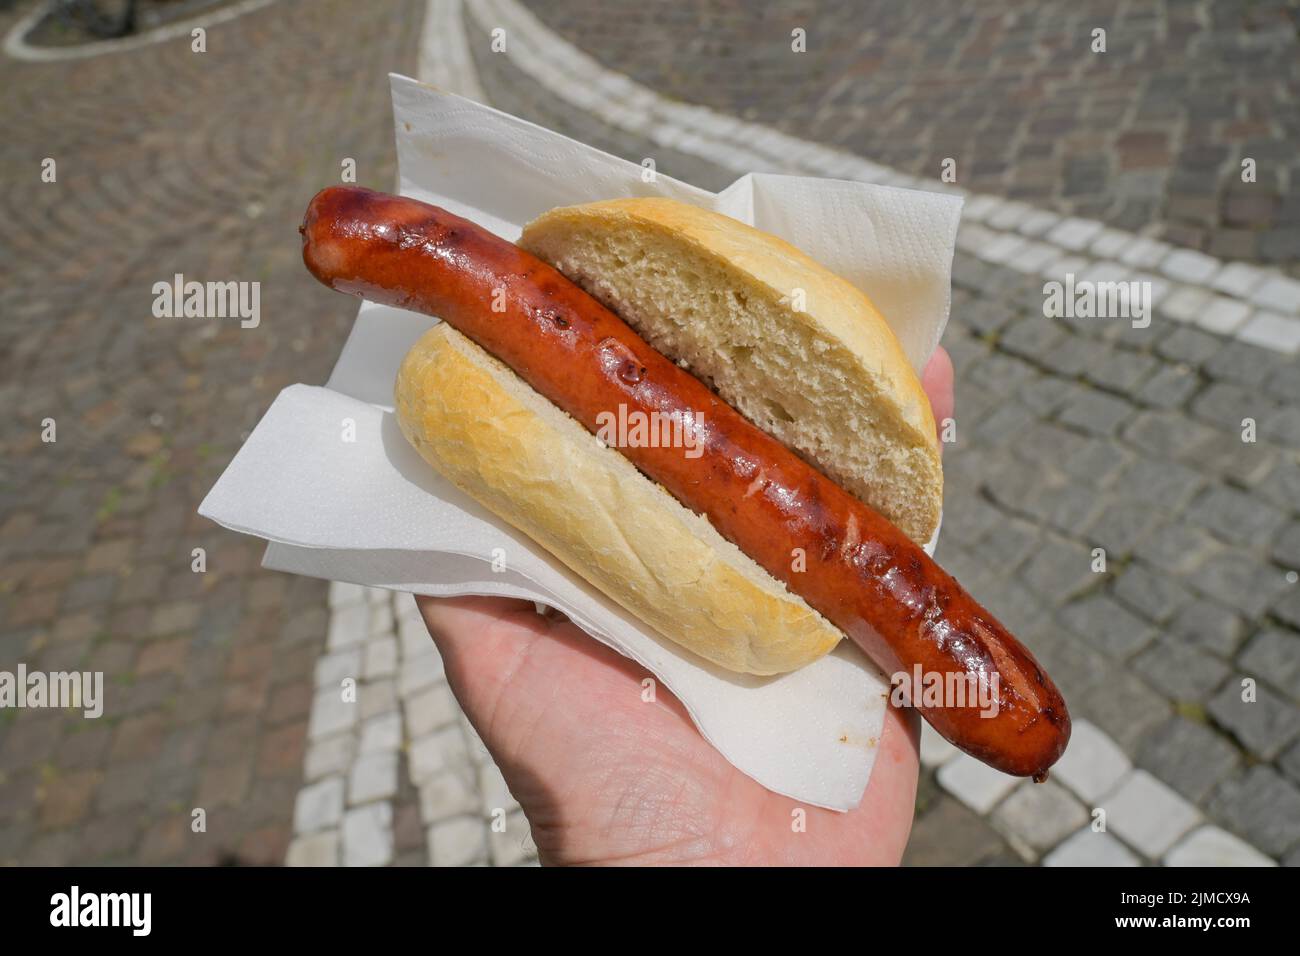 Beef sausage in a bun, Frankfurt am Main, Hesse, Germany Stock Photo